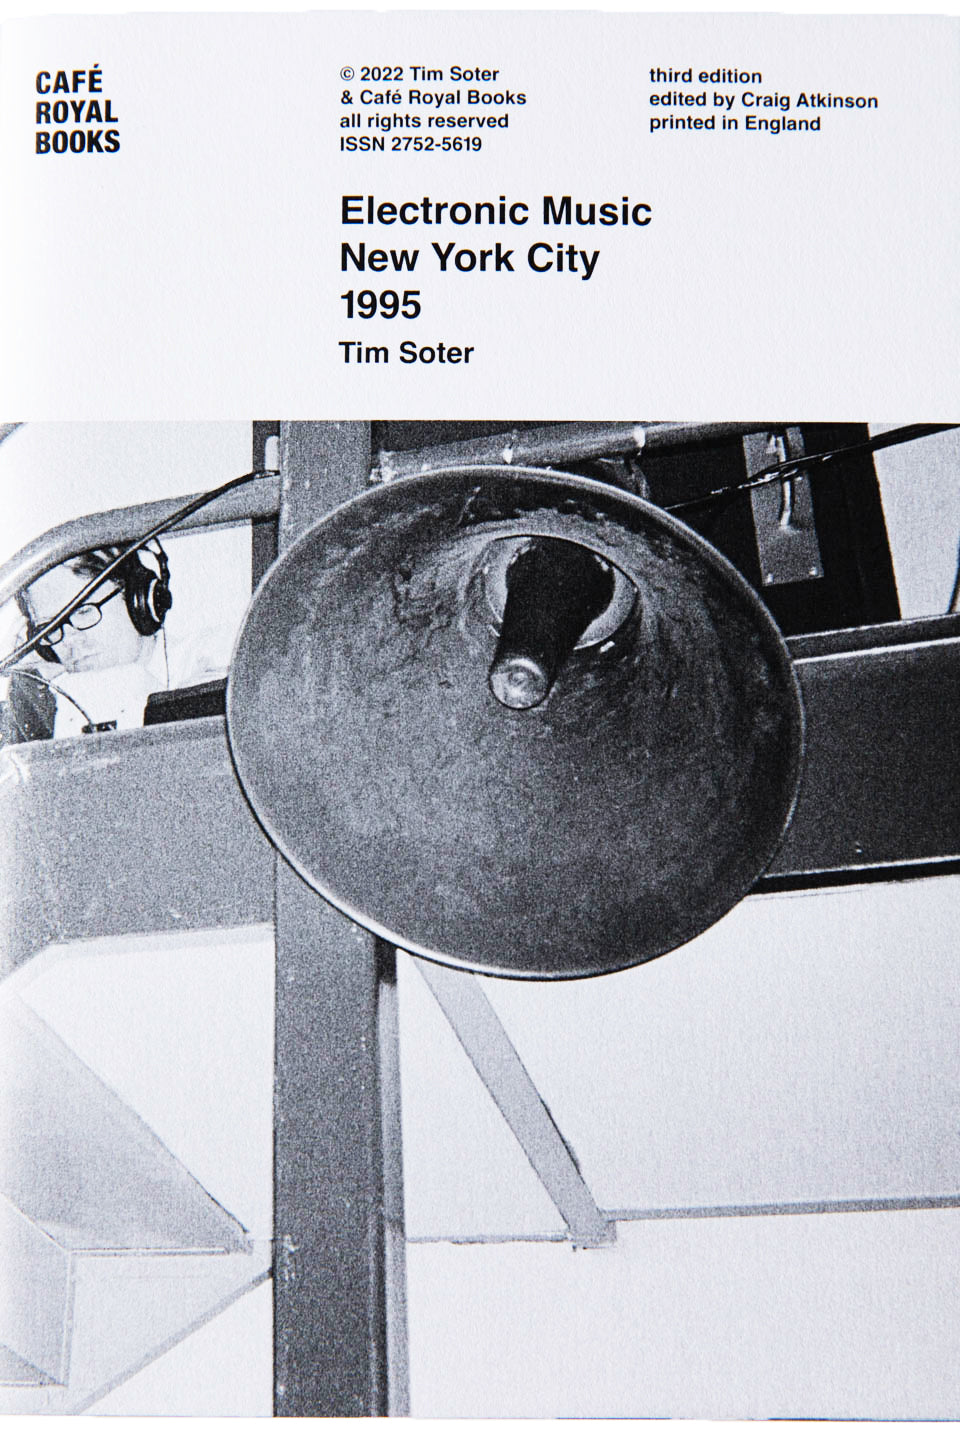 ELECTRONIC MUSIC NEW YORK CITY 1995